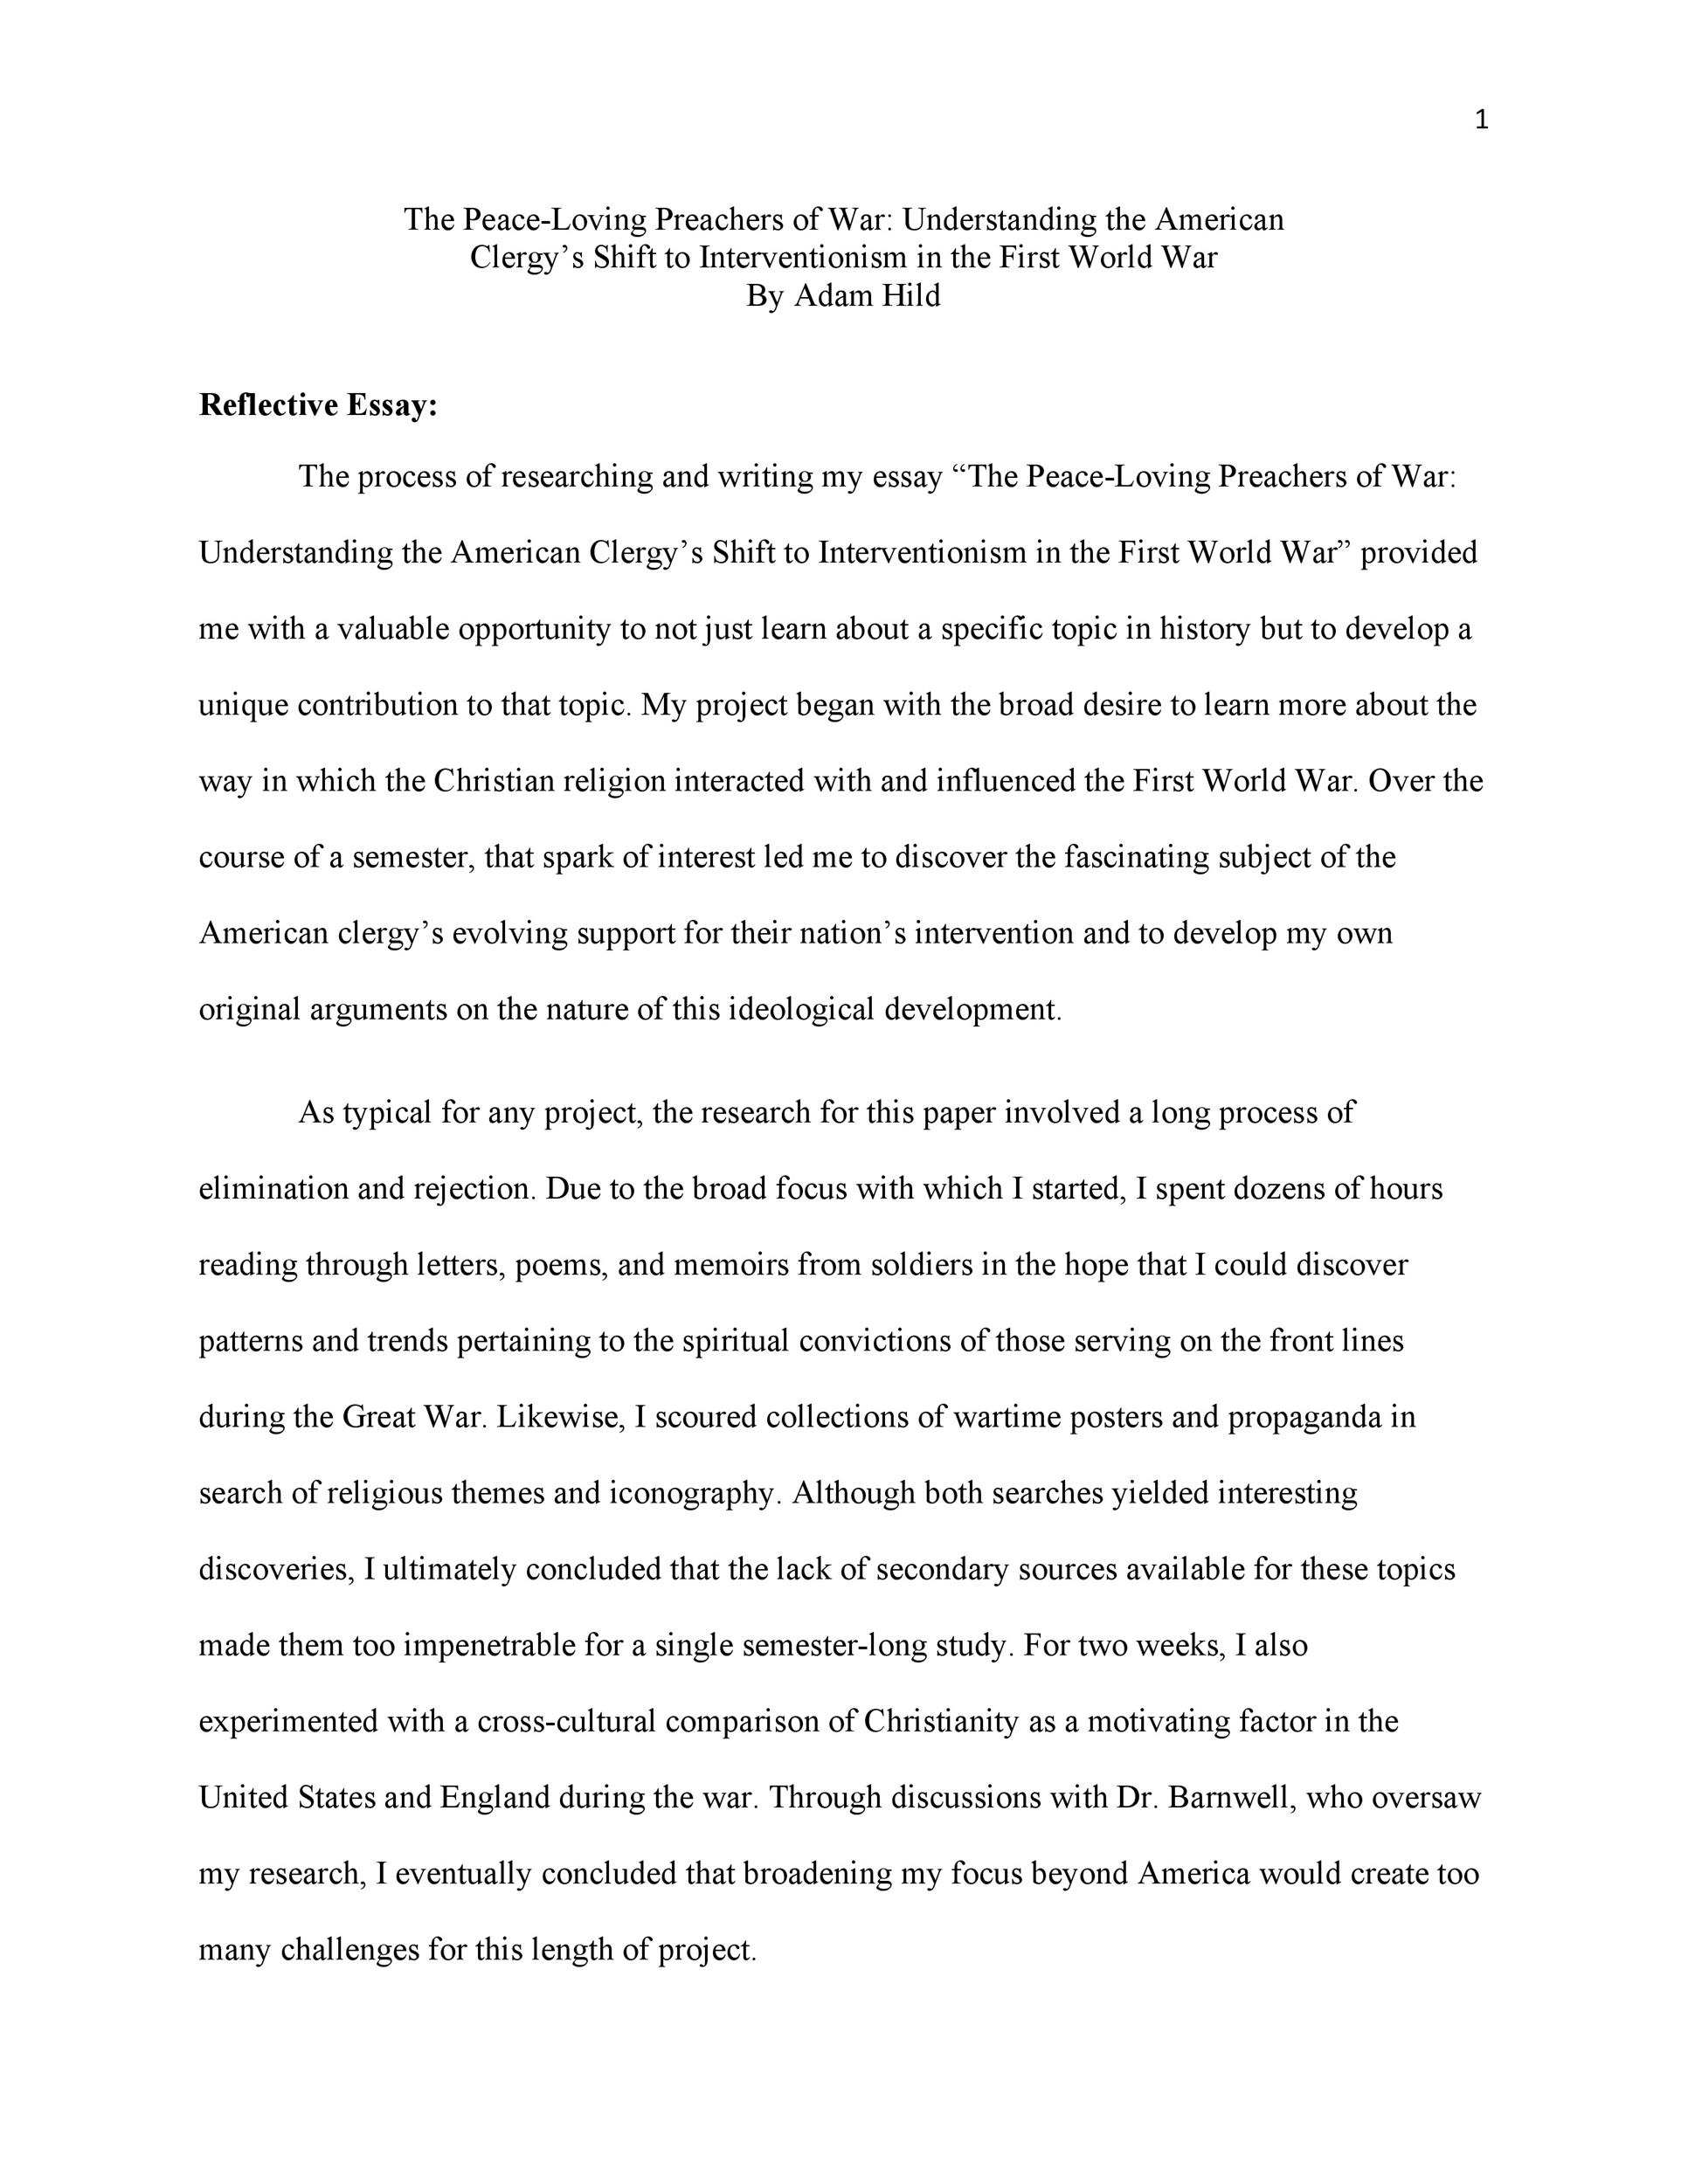 Reflective essay sample paper